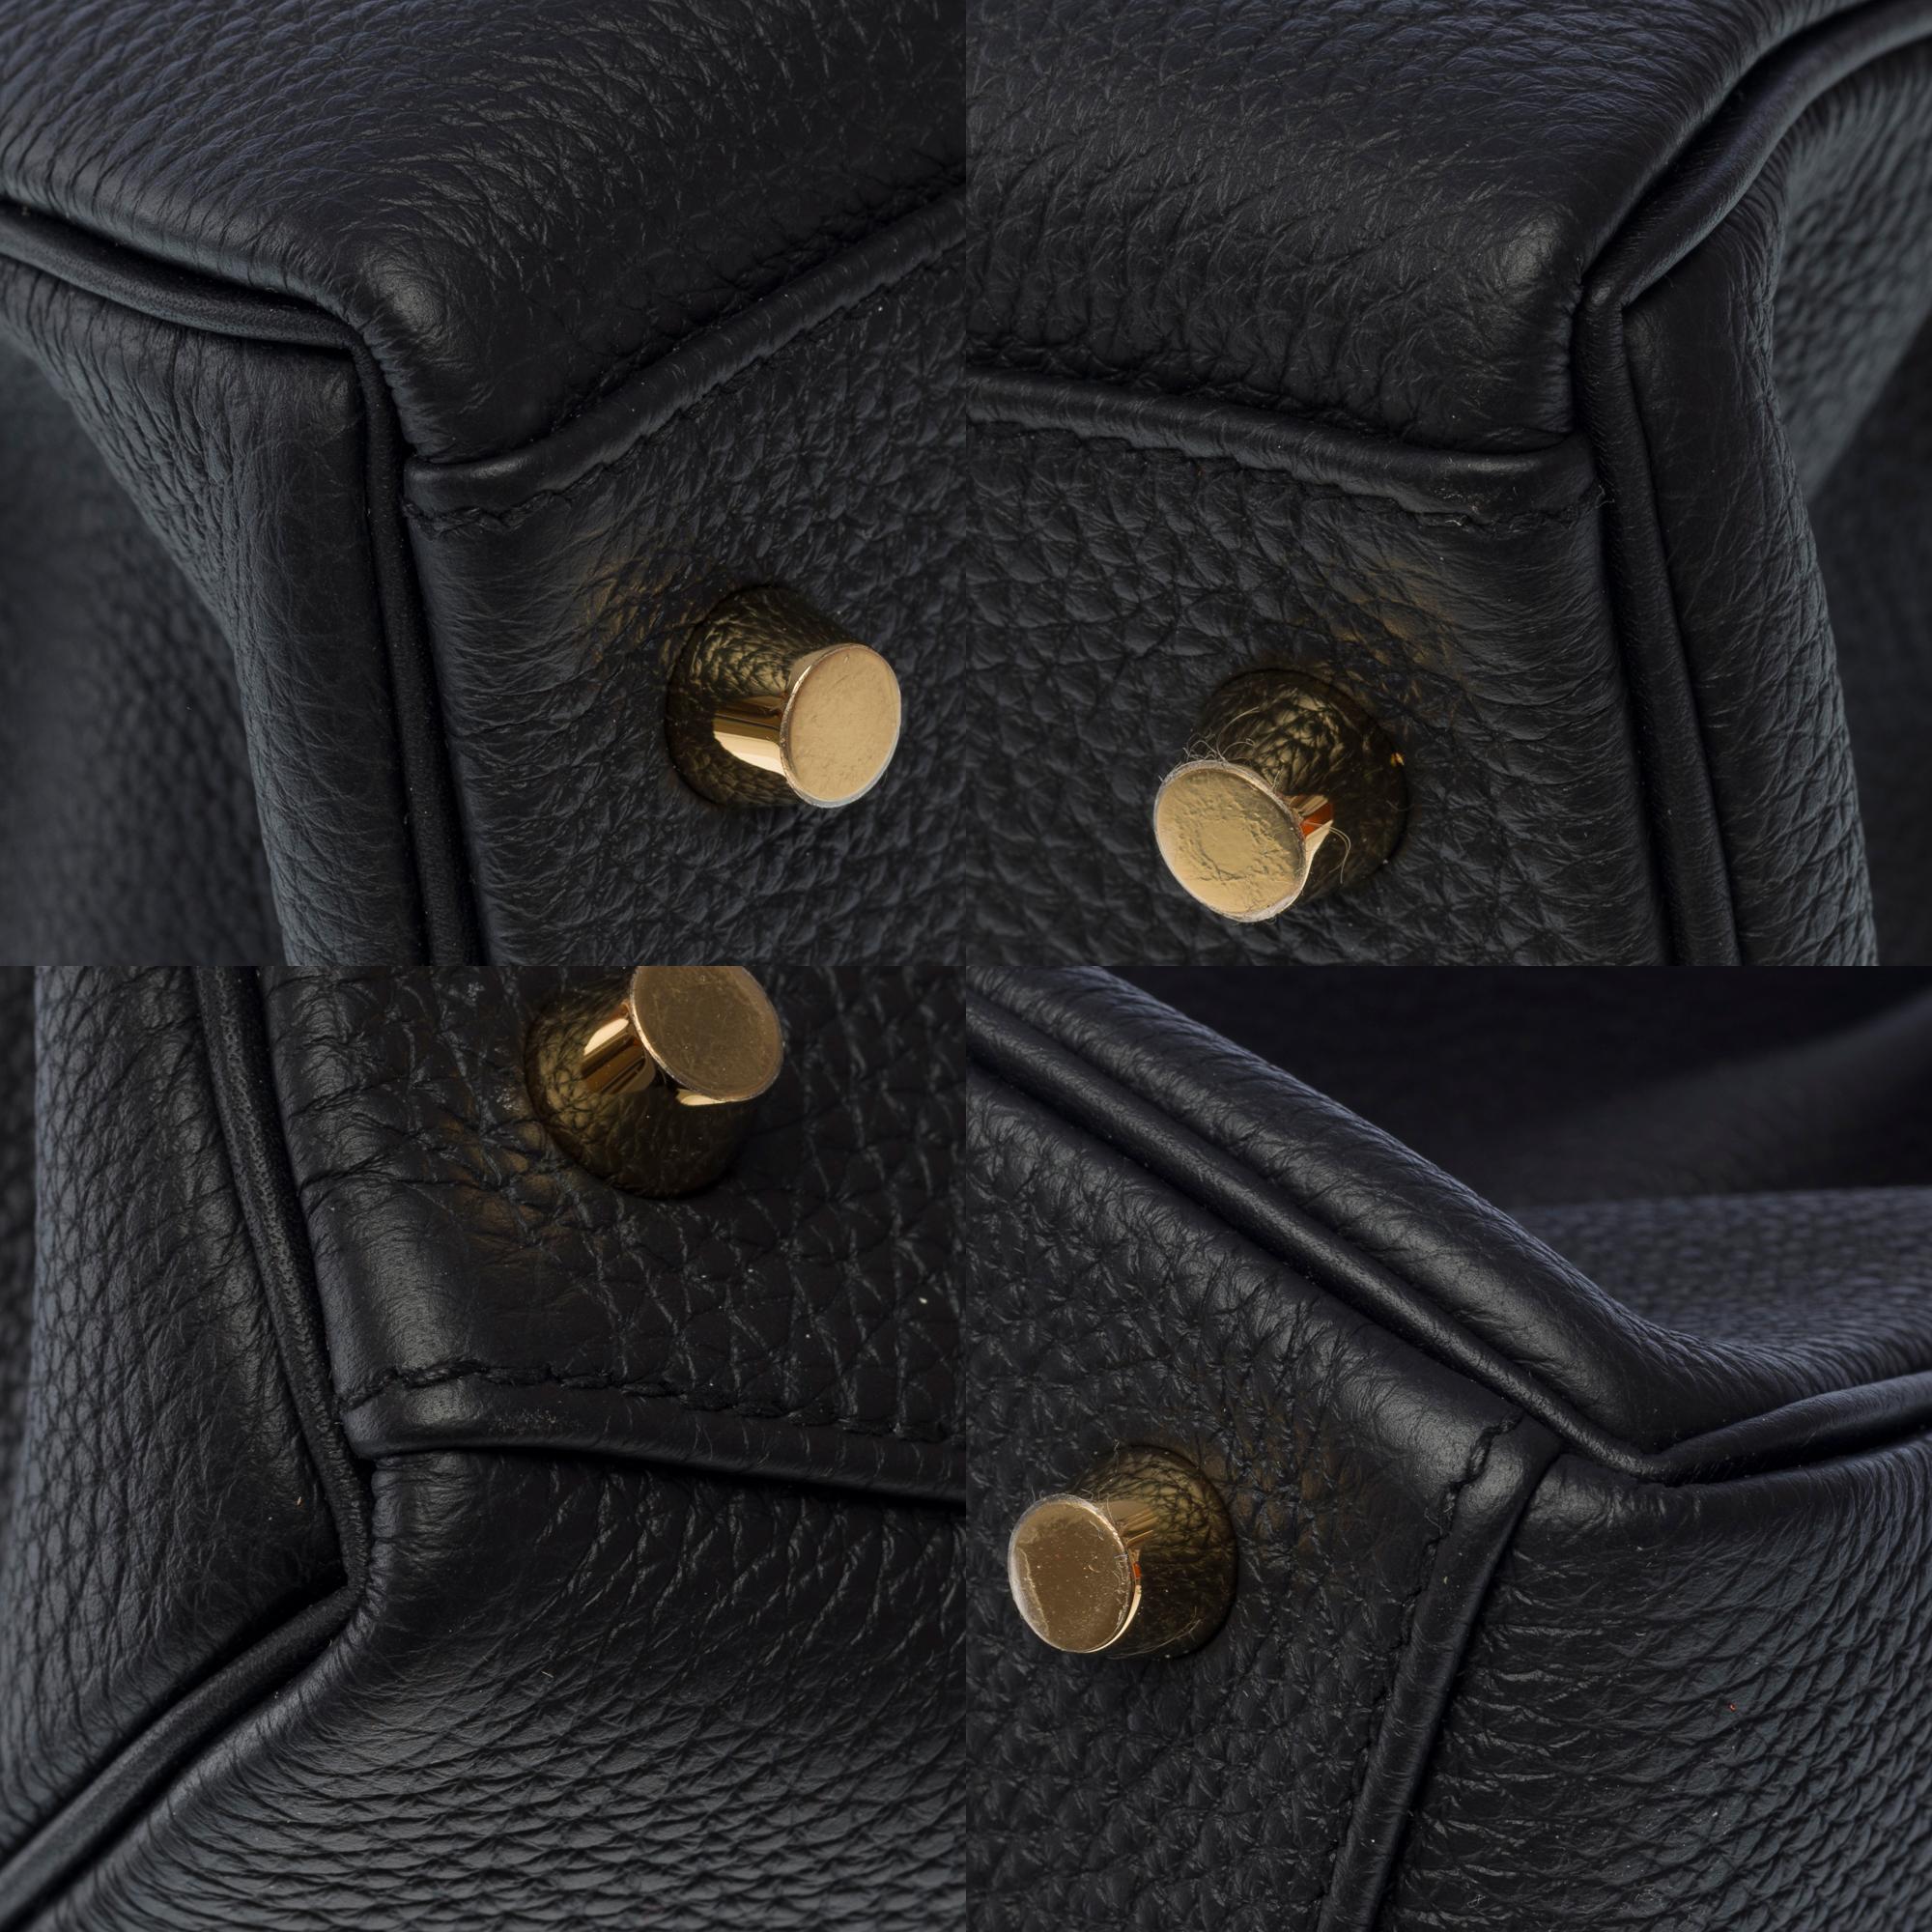 New Hermès Kelly 32 retourne handbag strap in Black Togo leather, GHW 8